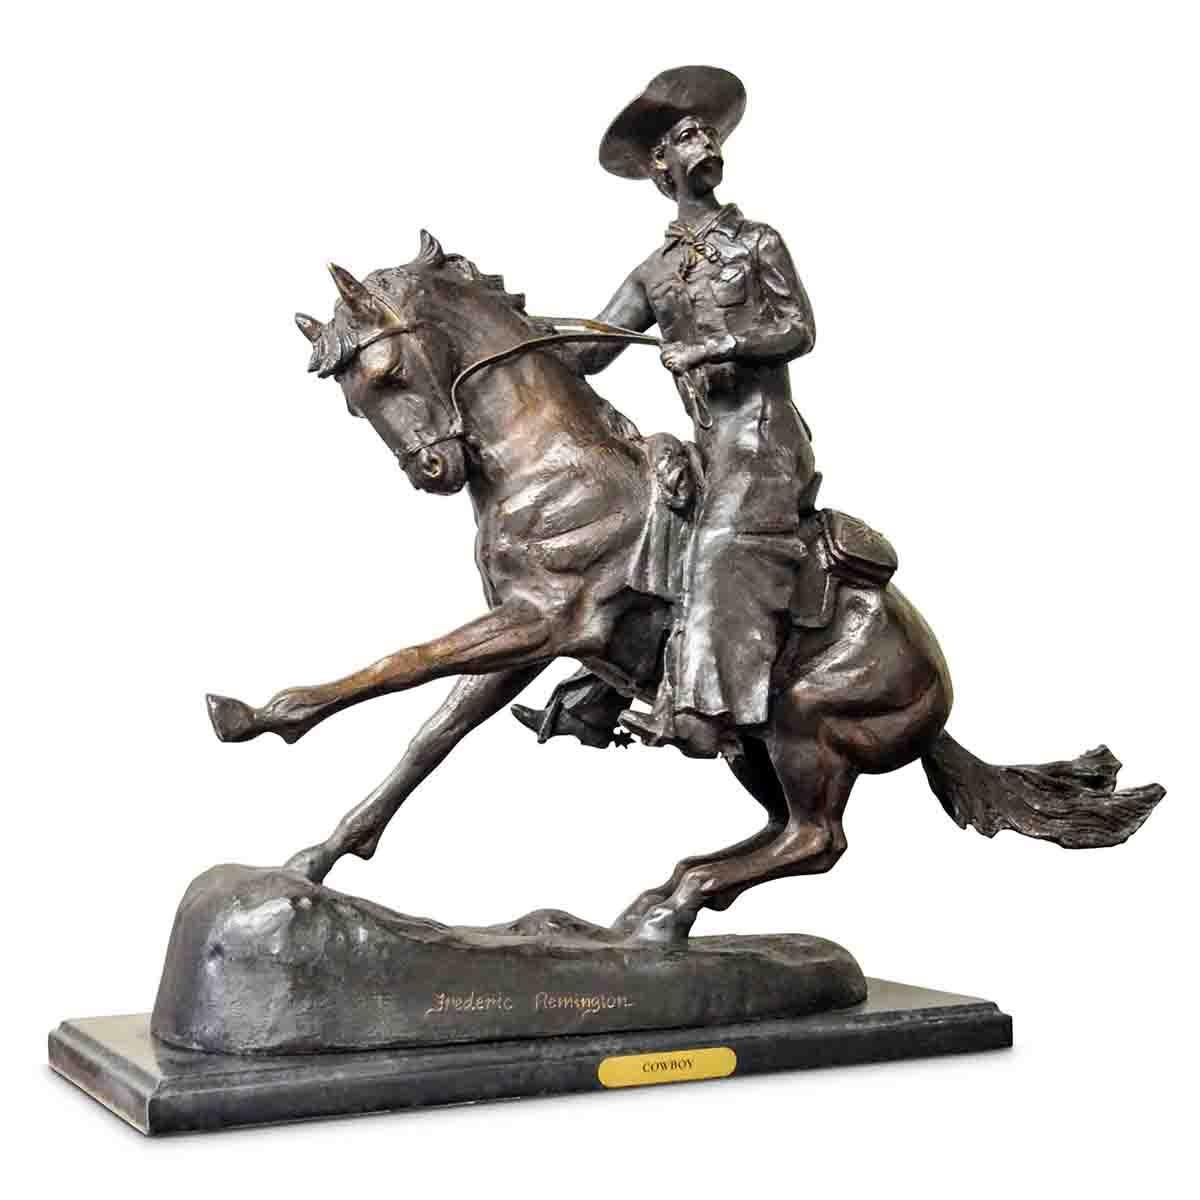 Cowboy, Cast Bronze Sculpture on Marble Base, after Frederic Remington For Sale 2